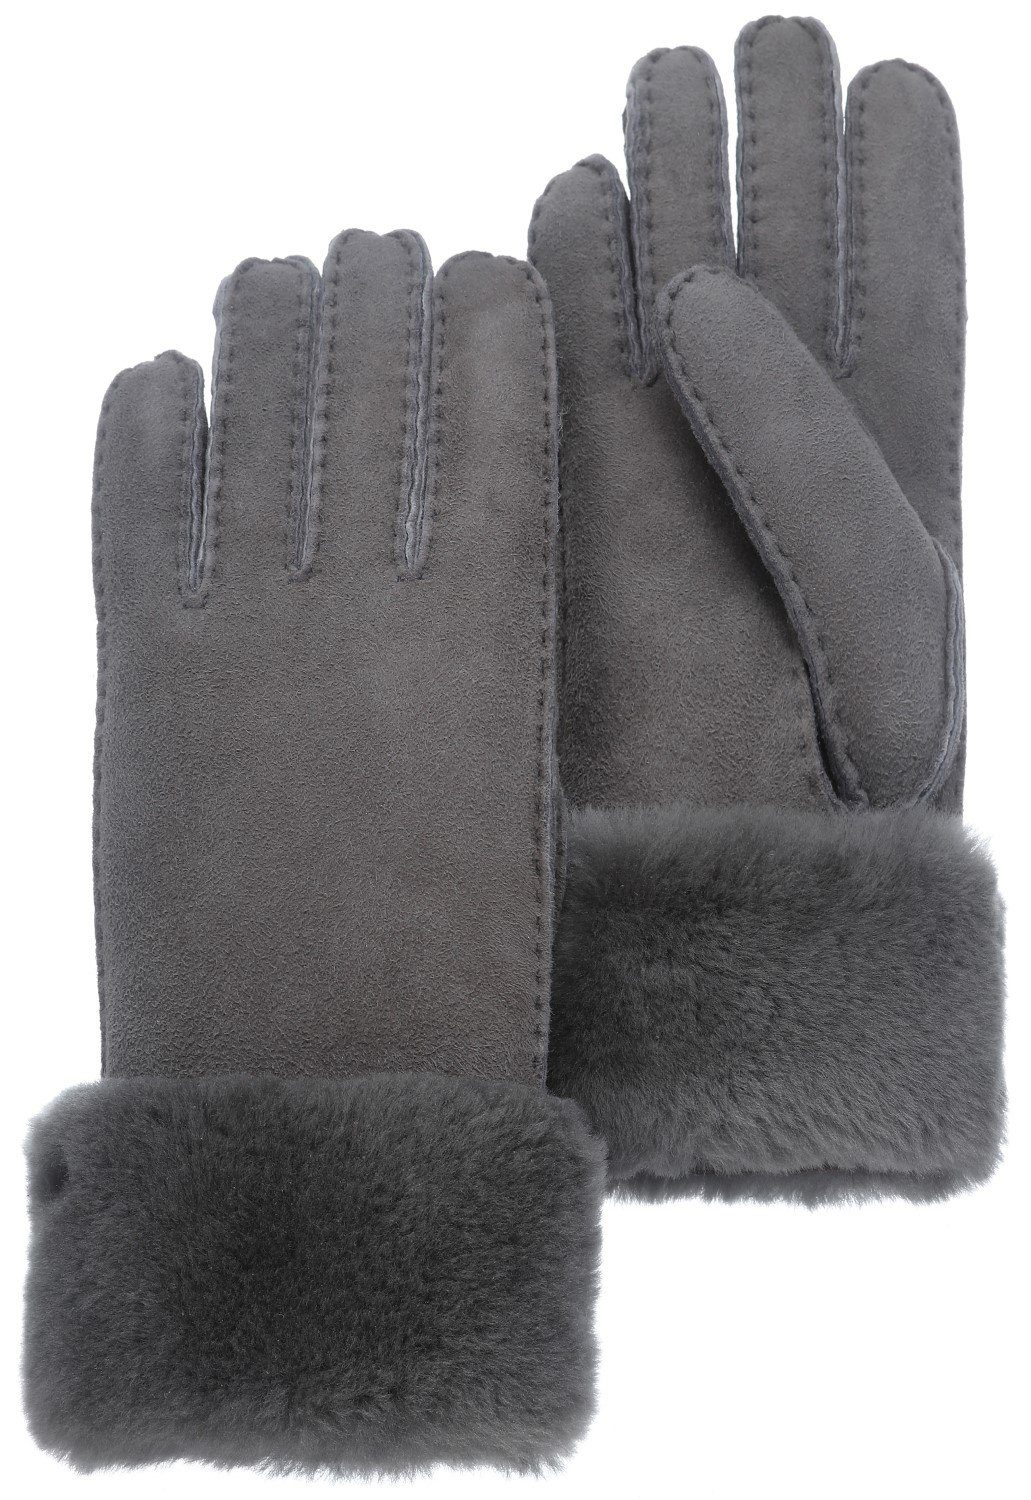 & Umschlag Lederhandschuhe PEARLWOOD Wildleder-Handschuhe warme Lammfell-Futter